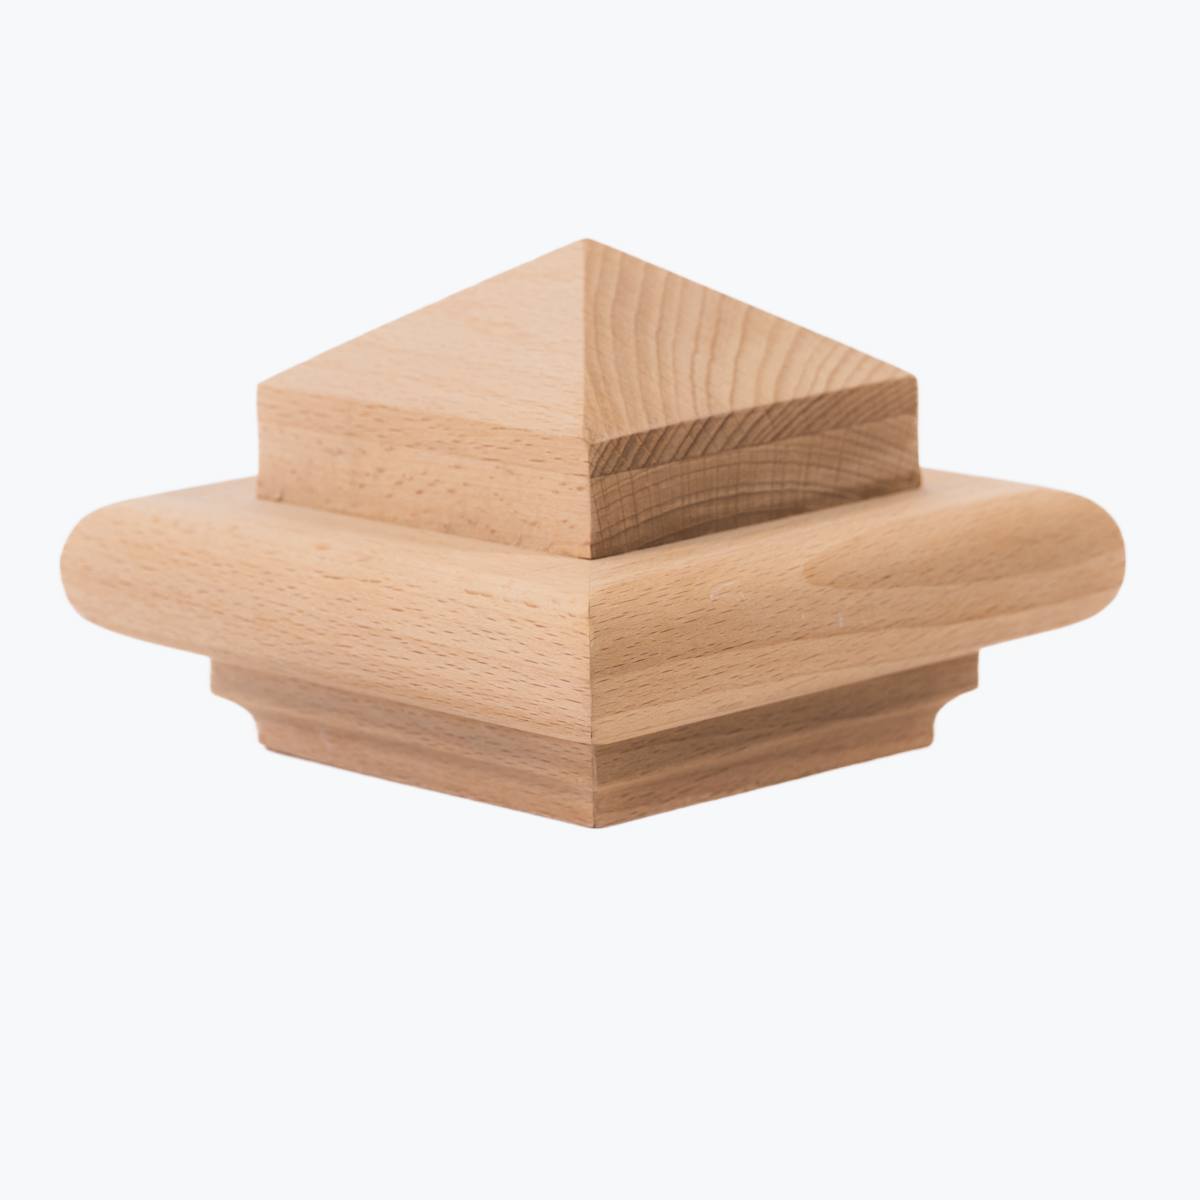 B350 - Box Newel Cap - "B" Style Pyramid Top - Fits 3 1/2" Post